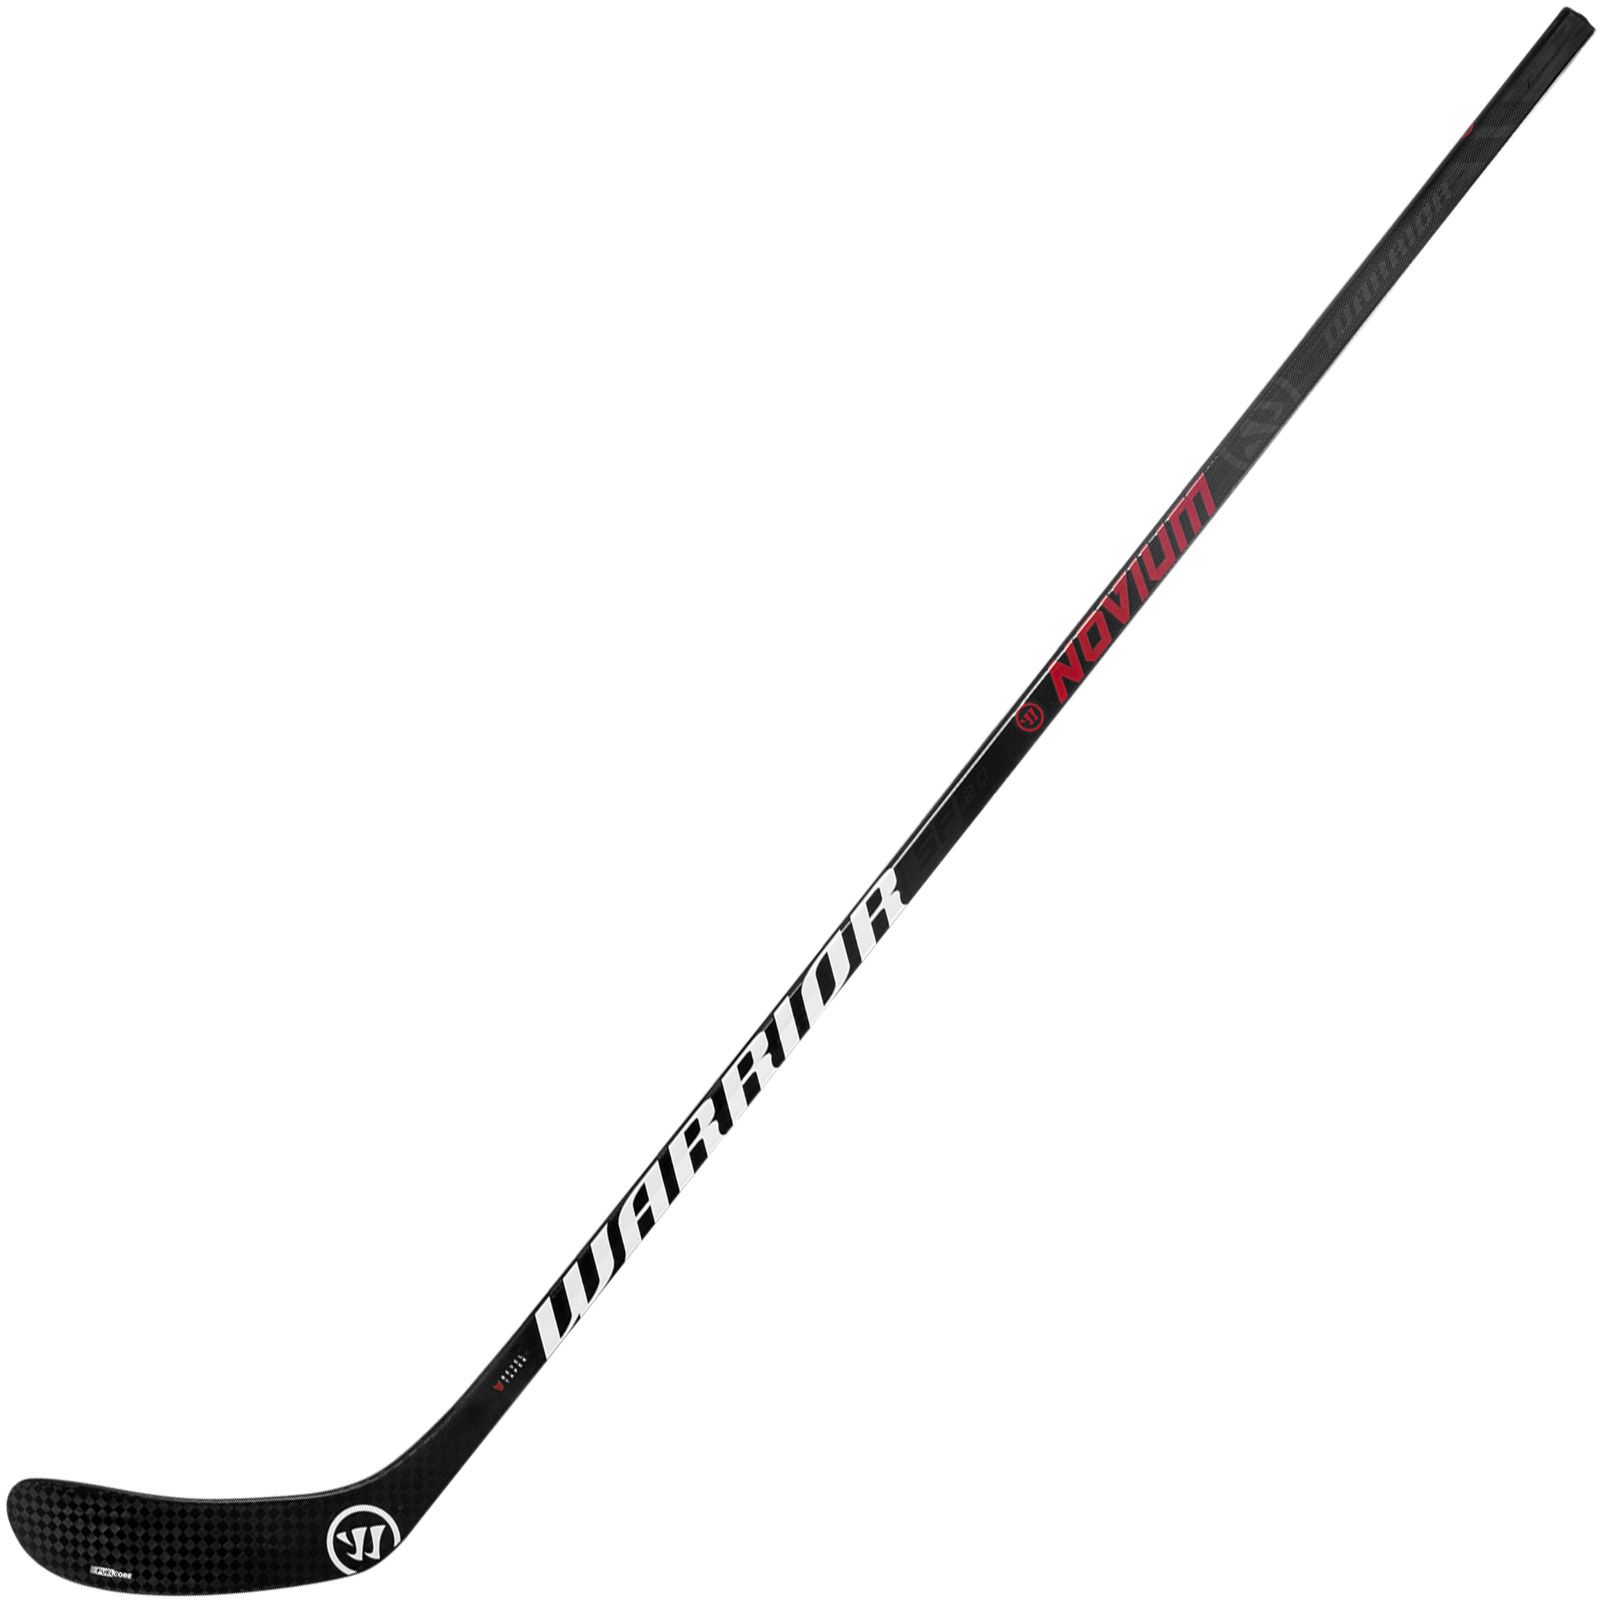 Warrior Novium Ice Hockey Stick